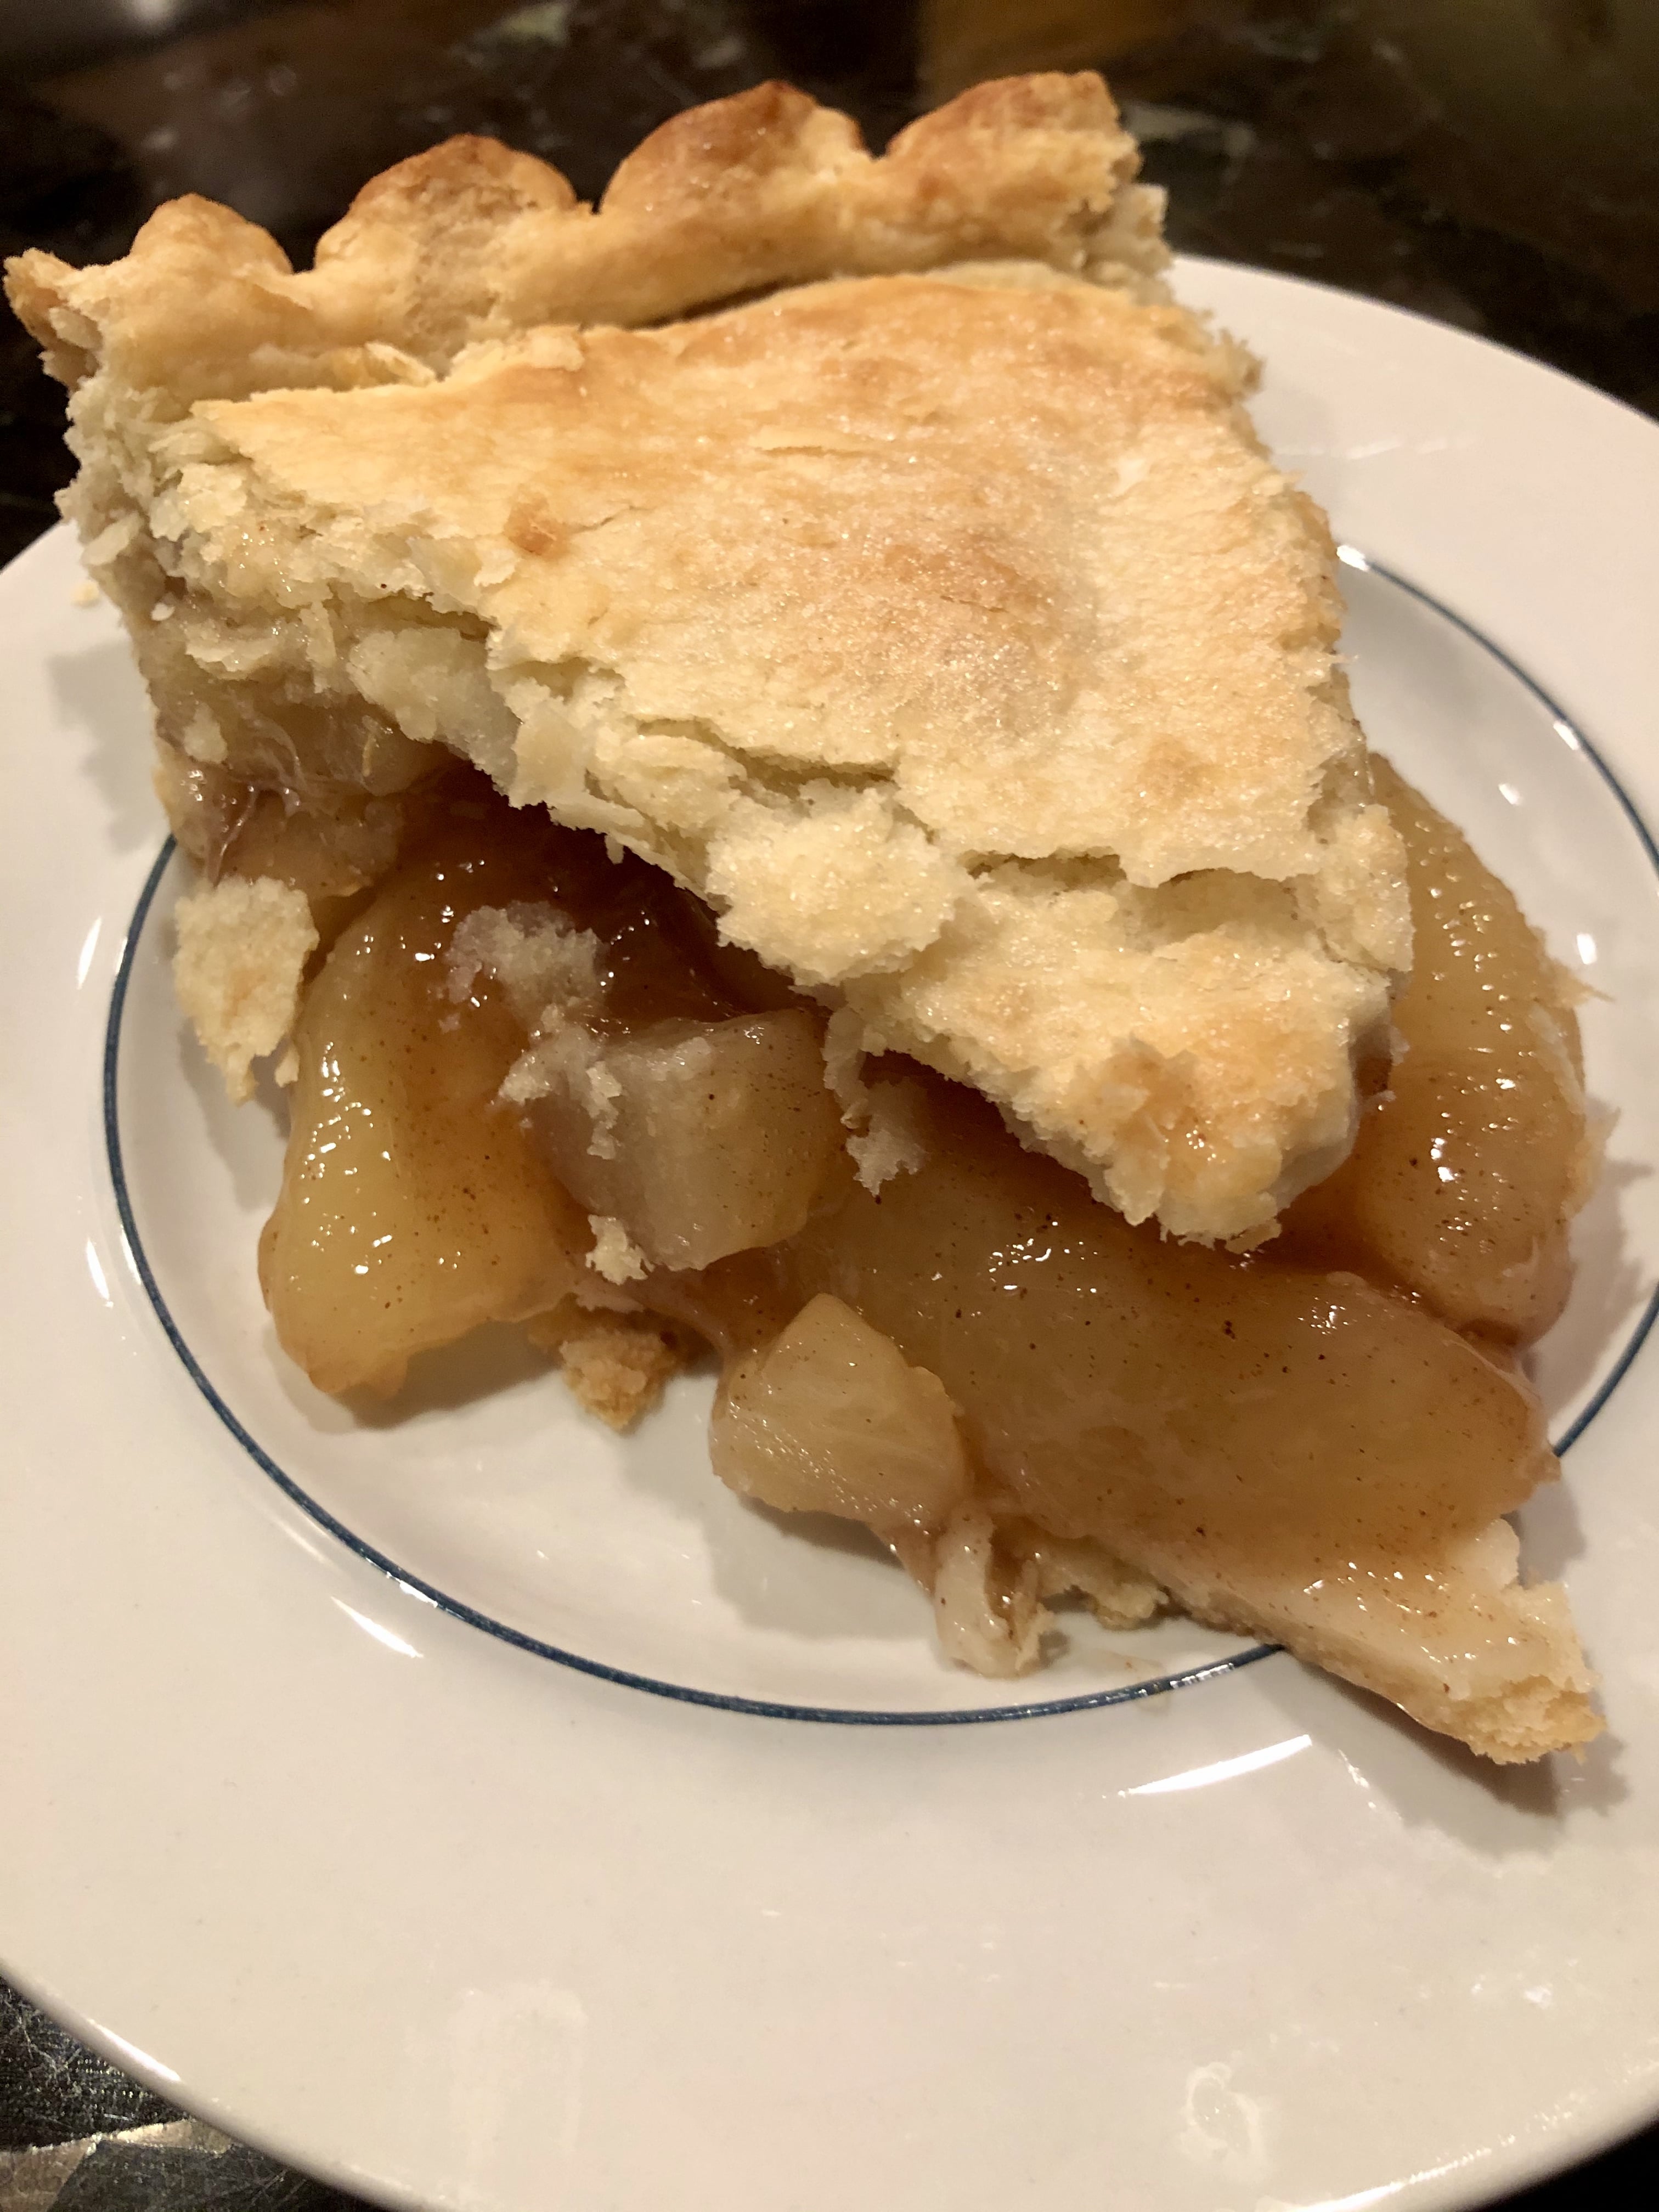 More Apple Pie!